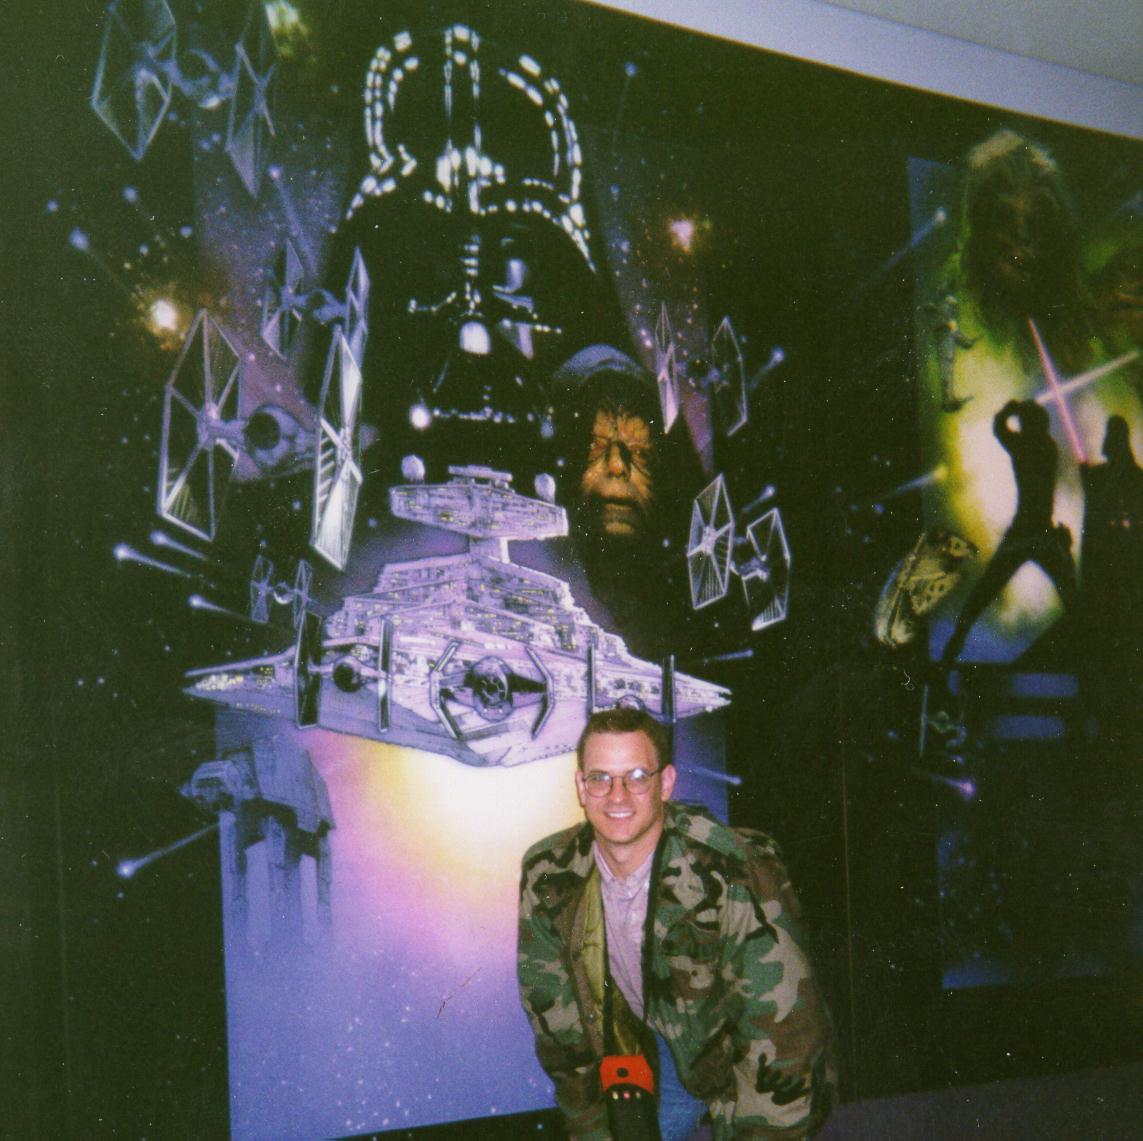 Star Wars museum entrance